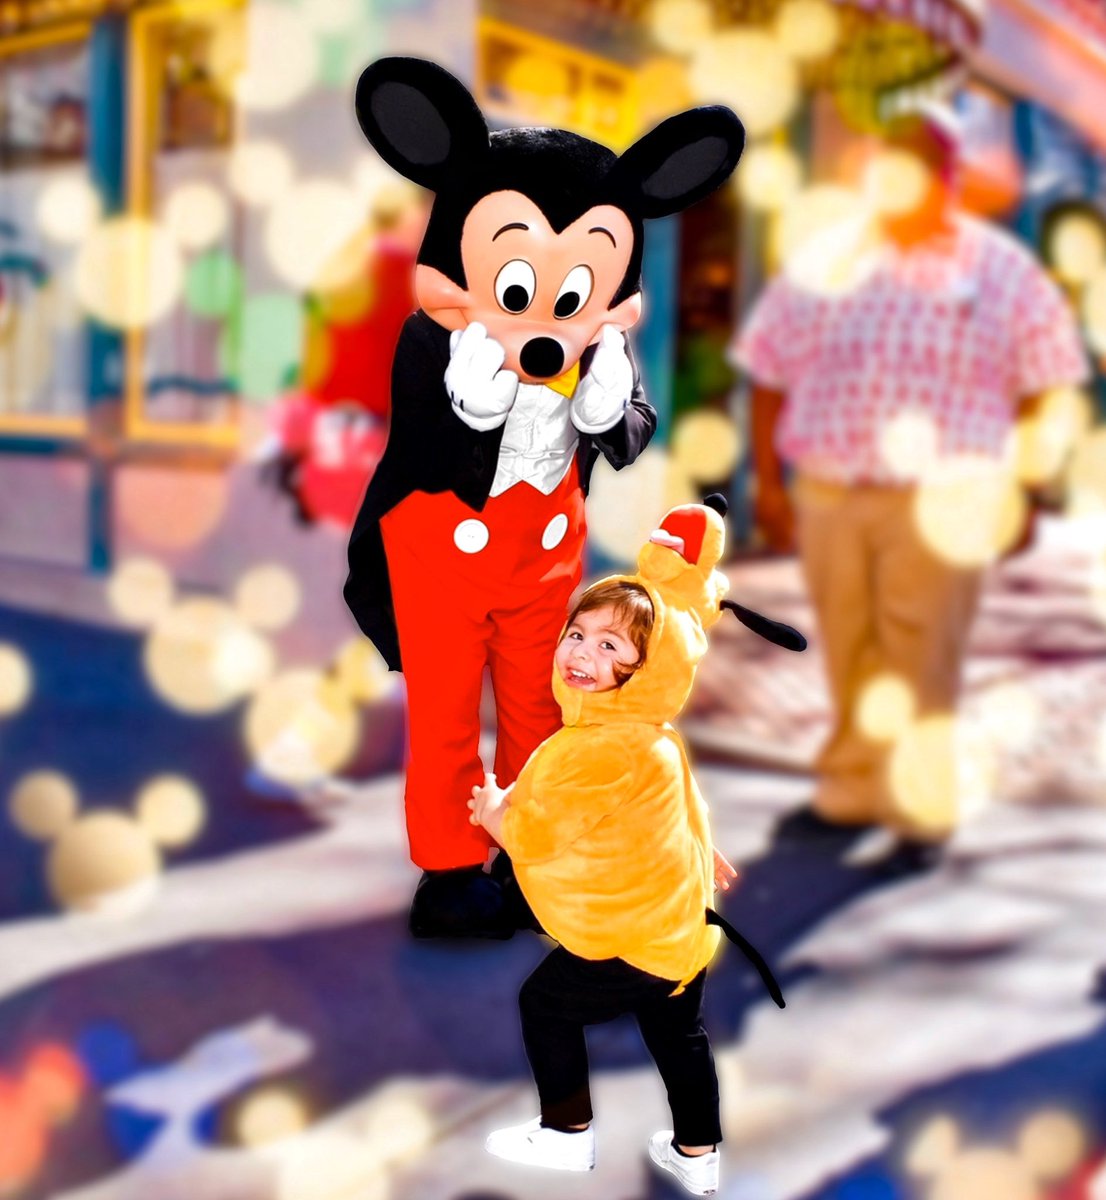 Our baby Pluto meeting his bestfriend, #MickeyMouse @Disneyland ❣️

Follow us on Instagram and TikTok @tomorrowsmemoriess instagram.com/tomorrowsmemor… 

#disneyland #disneybaby #Disney #pluto #tiktok #cute #adorable #disneyfamily #disneykid #DisneyPlus #DisneyPlus #Disneychannel